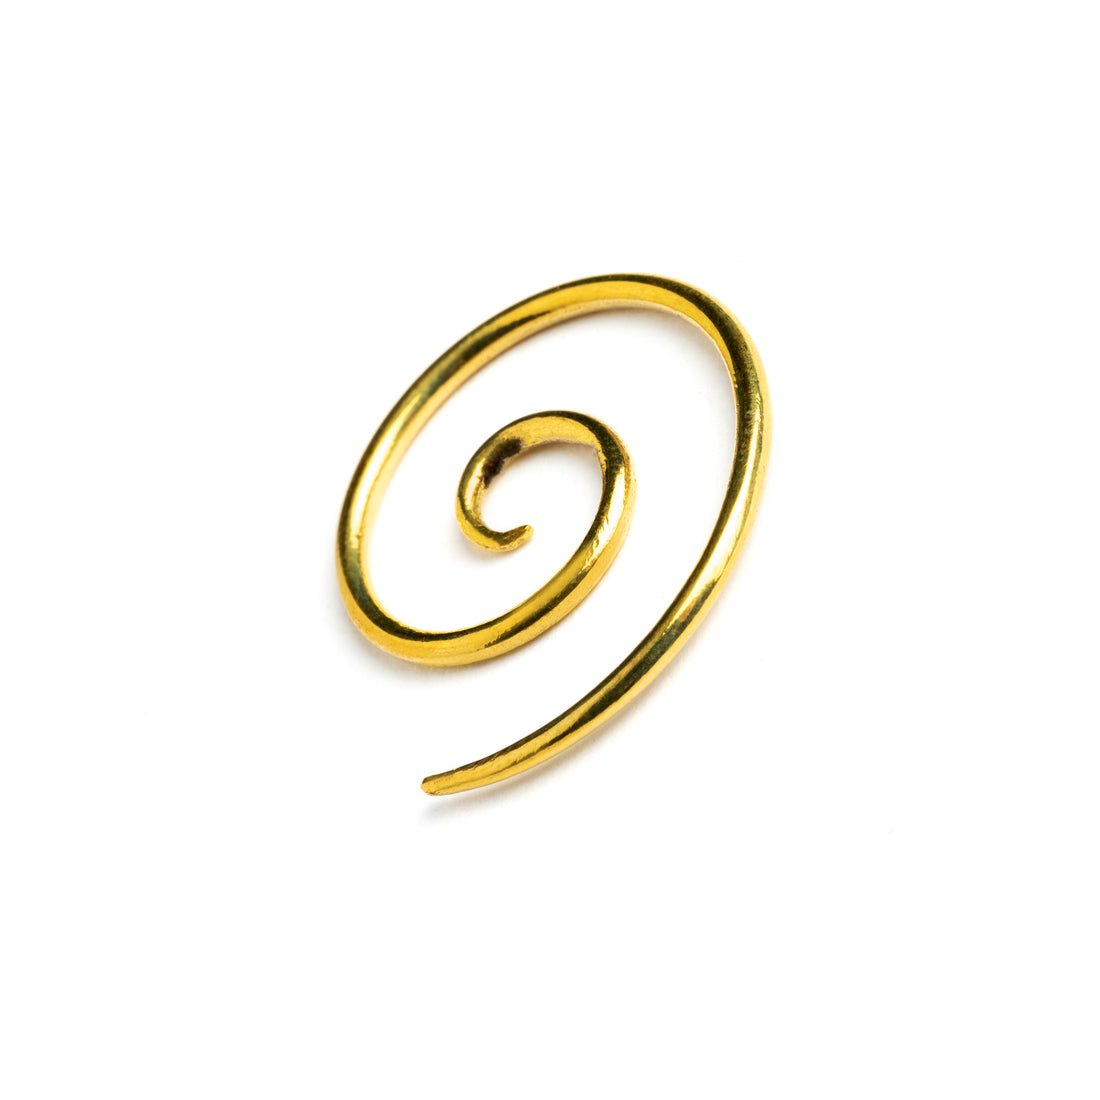 single golden brass spiral hoop earring right side view